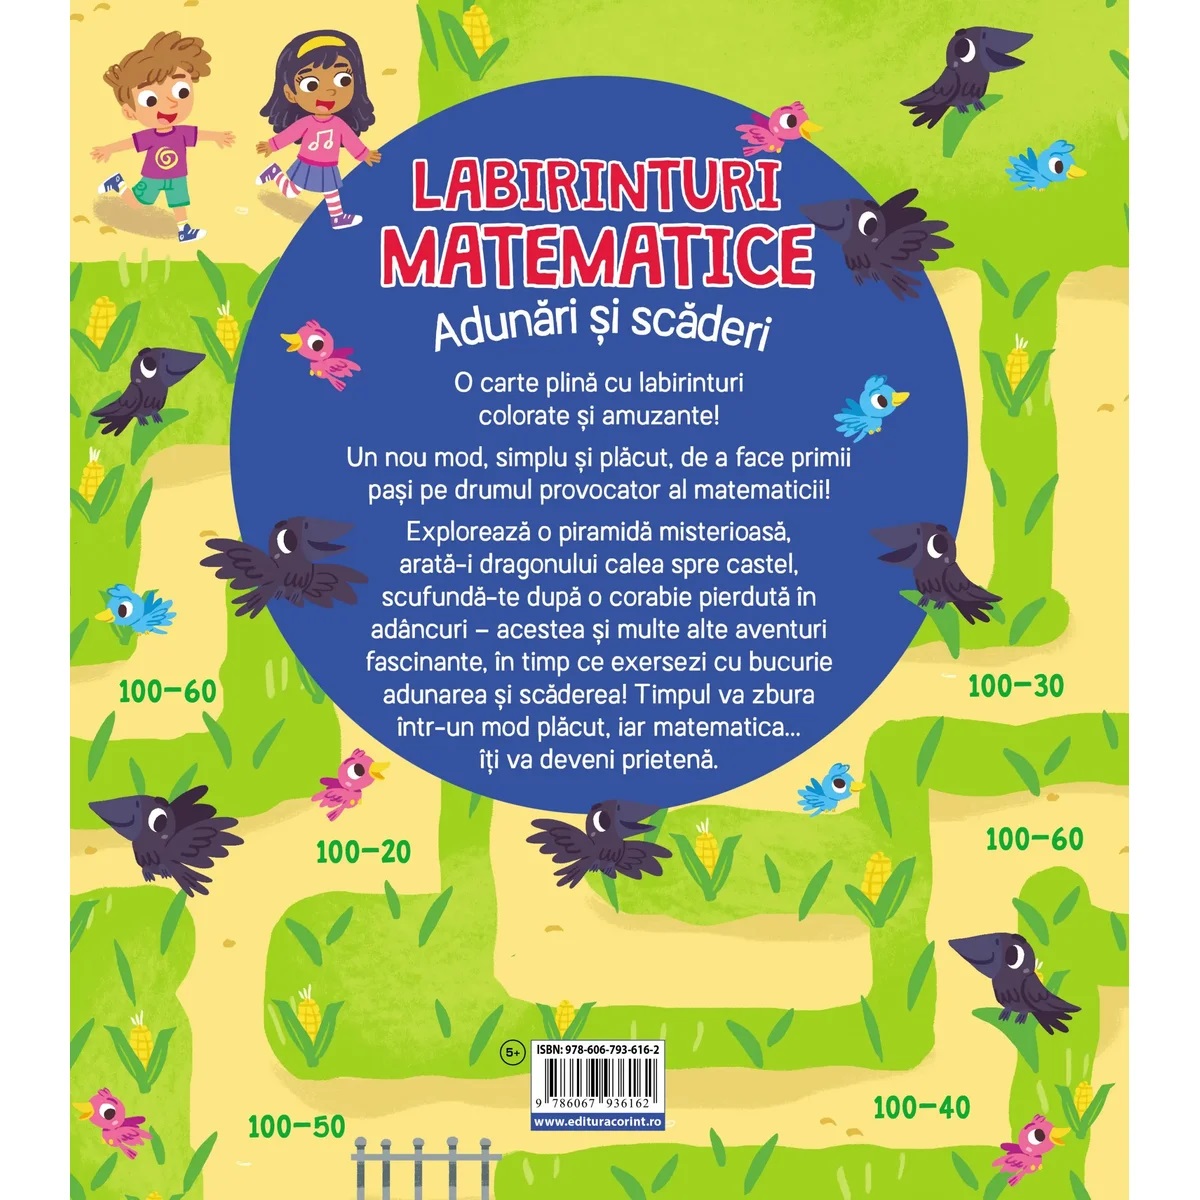 Labirinturi matematice - Adunari si scaderi PlayLearn Toys